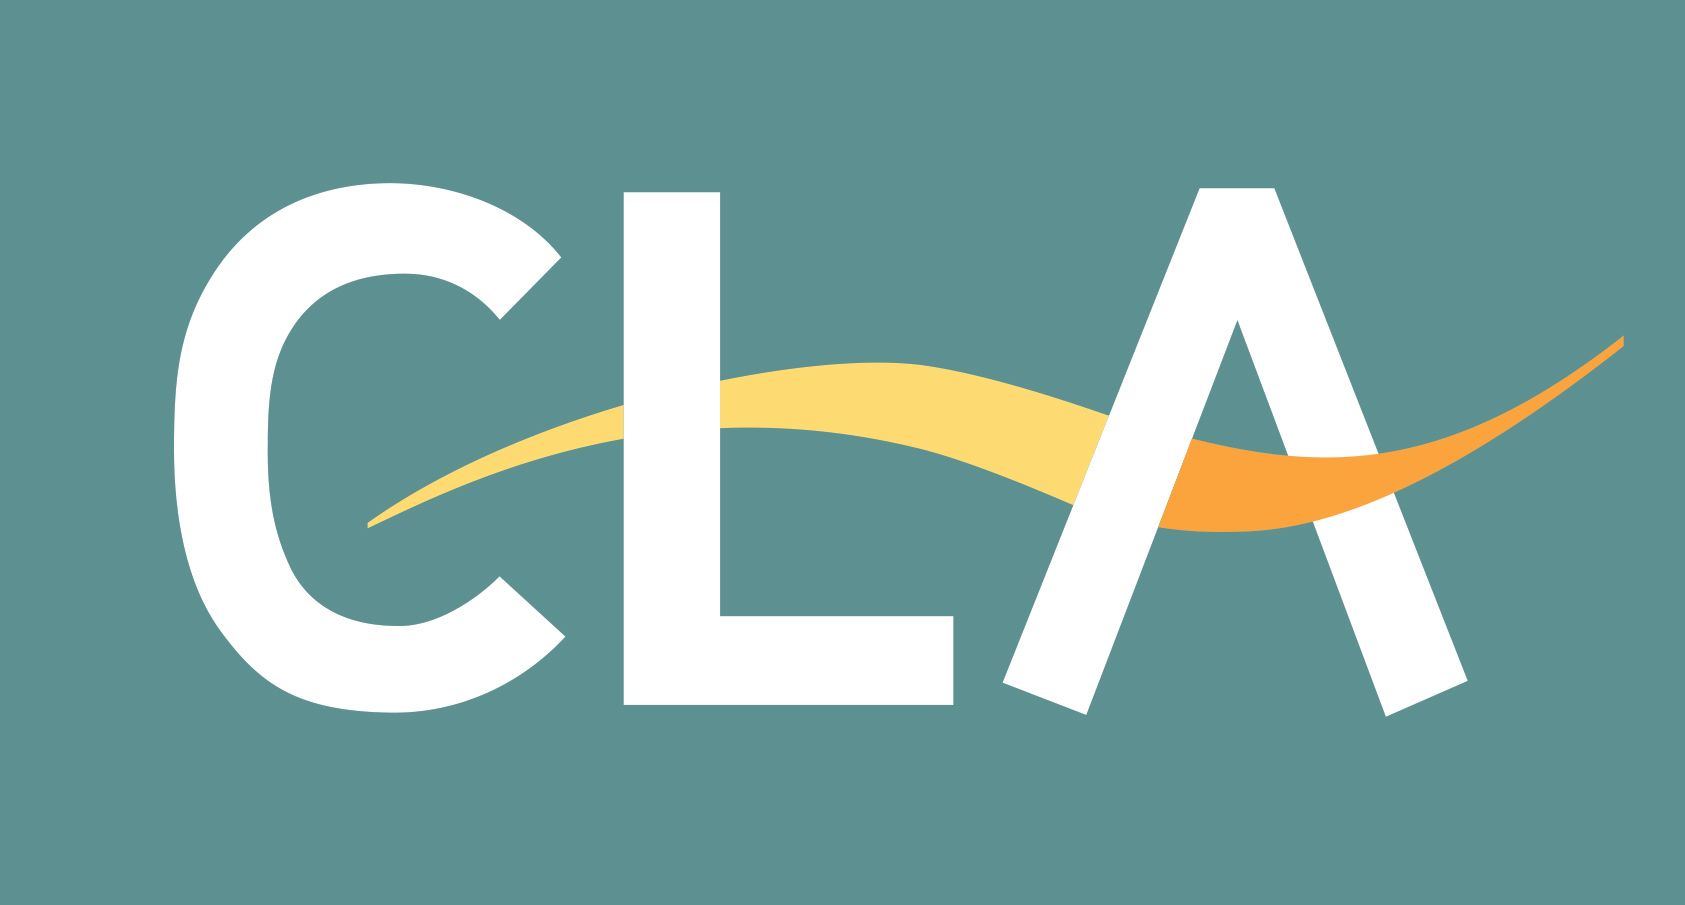 CLA logo for AHDB seminar page